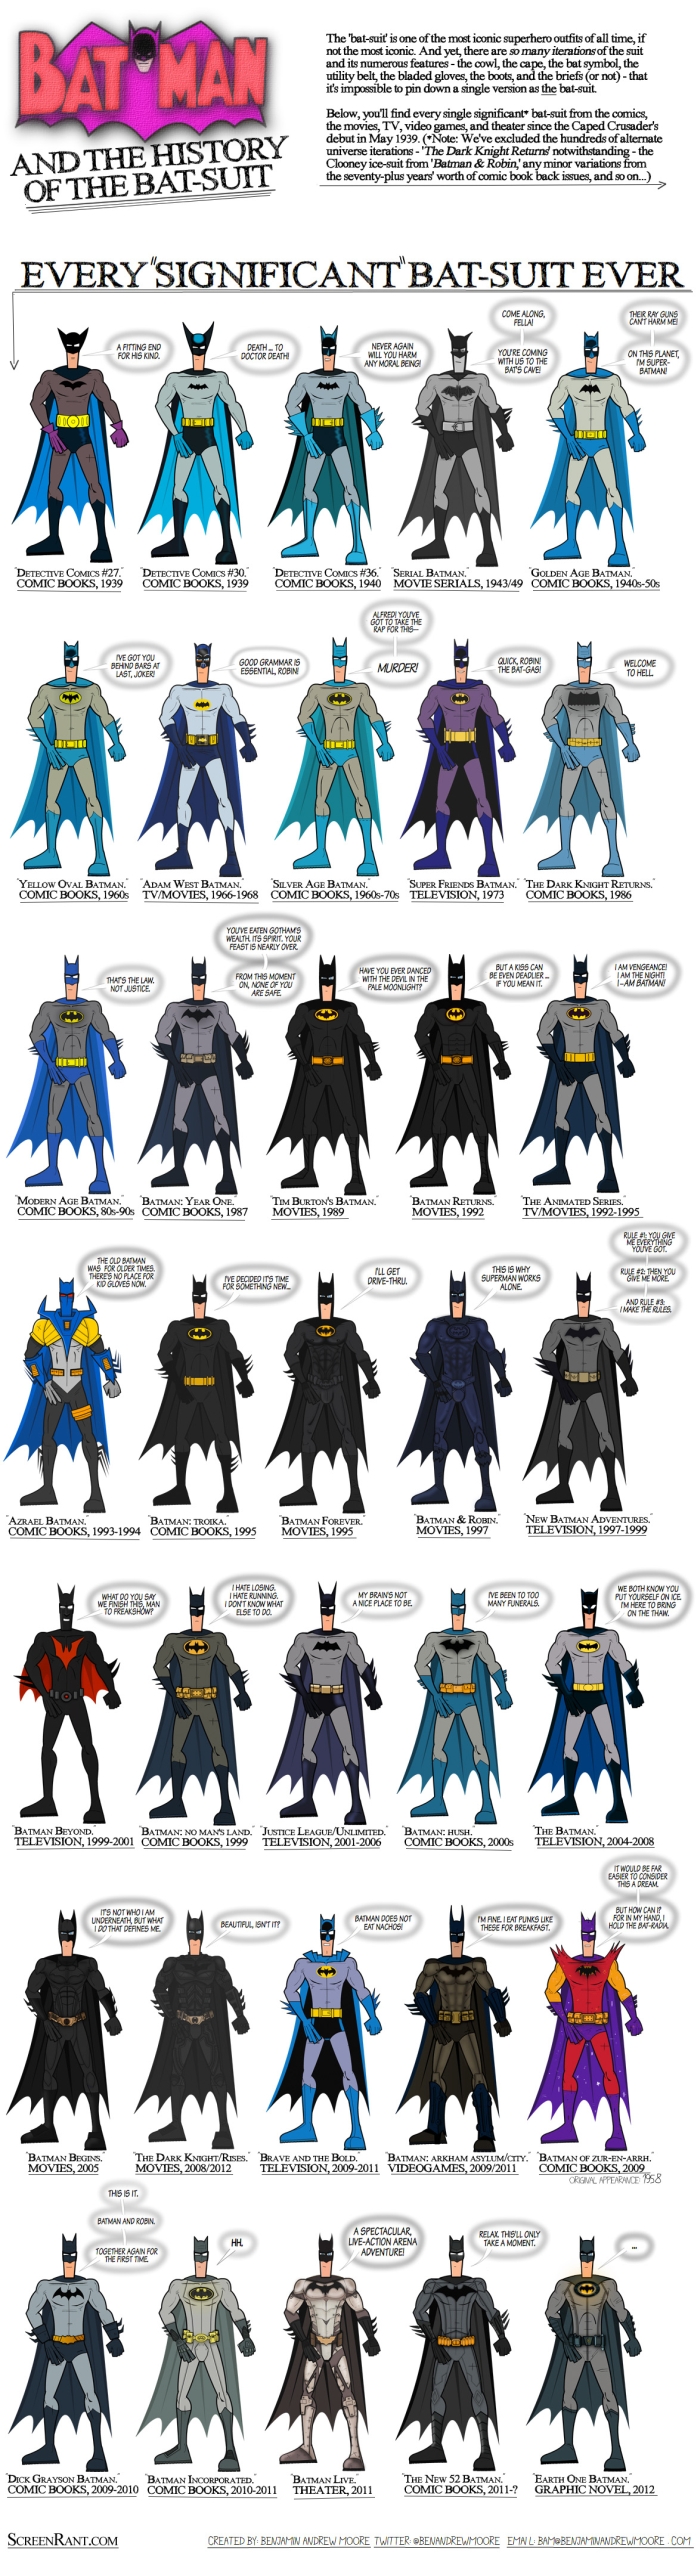 Batman Infographic: Every Bat-Suit Ever (infographic)